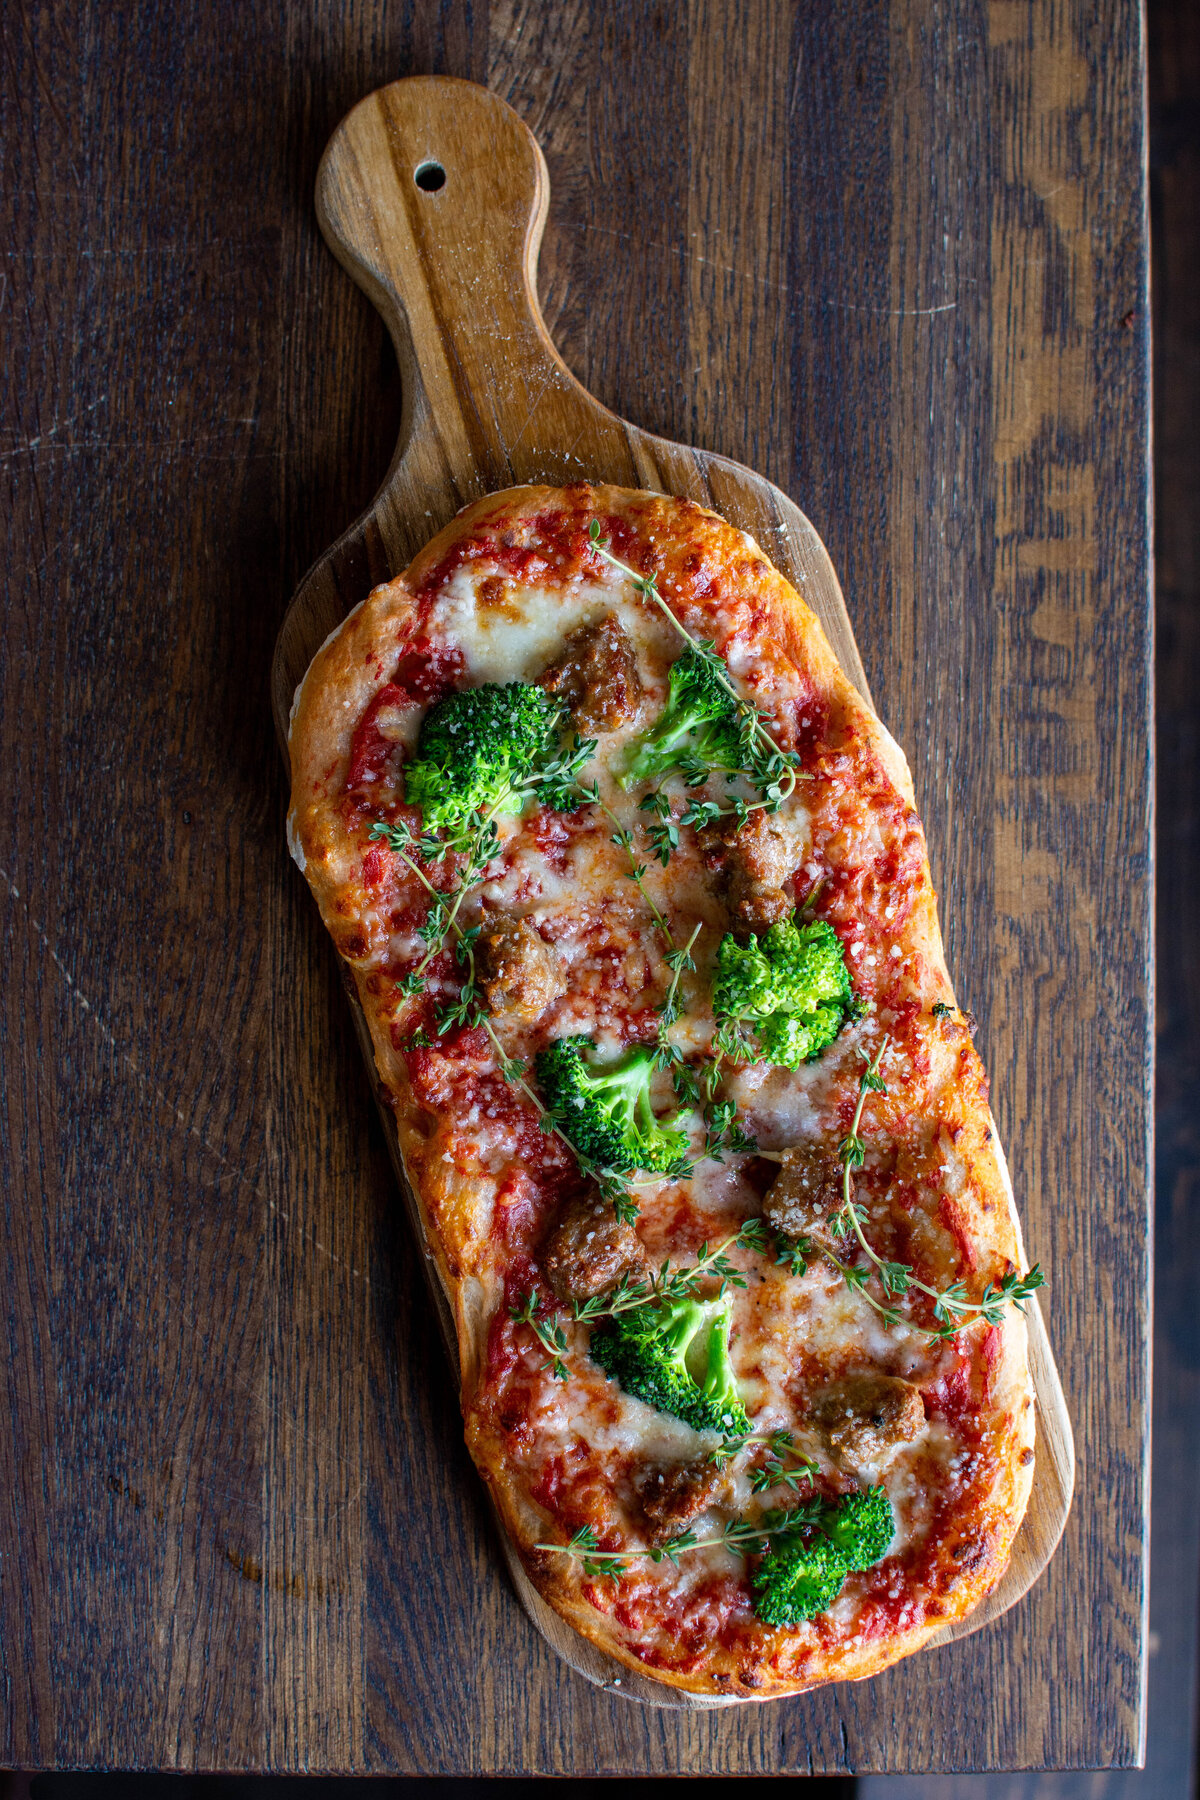 Pizza with mozzarella, tomato sauce and broccoli and sausage